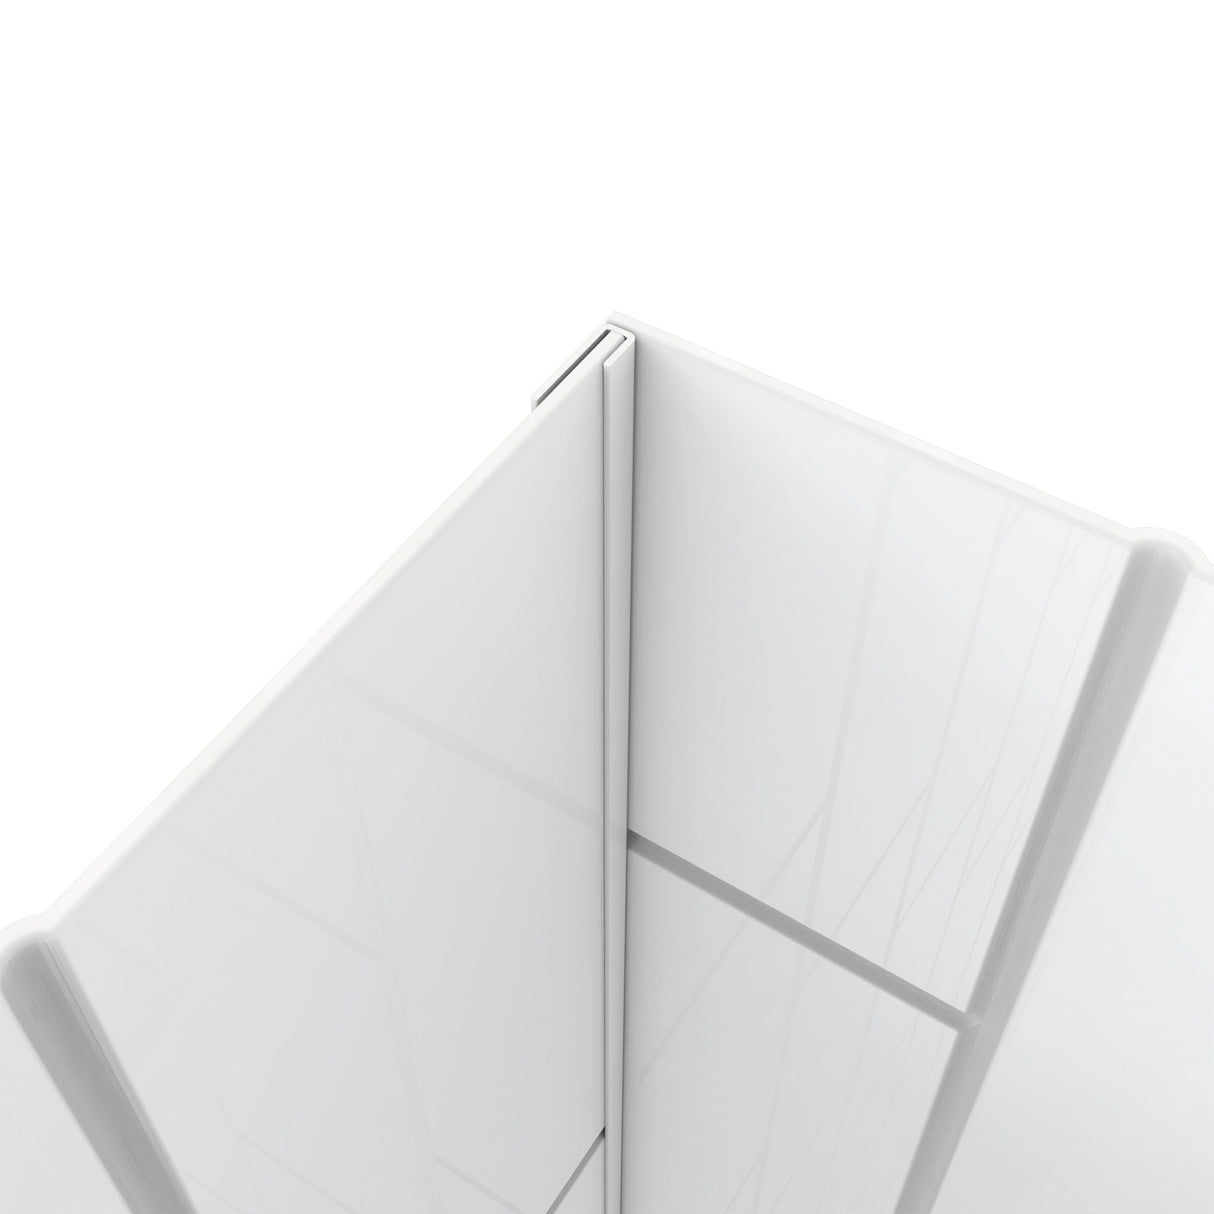 DreamLine Aqua-Q Fold 36 in. D x 36 in. W x 76 3/4 in. H Frameless Bi-Fold Shower Door in Oil Rubbed Bronze with White Kit